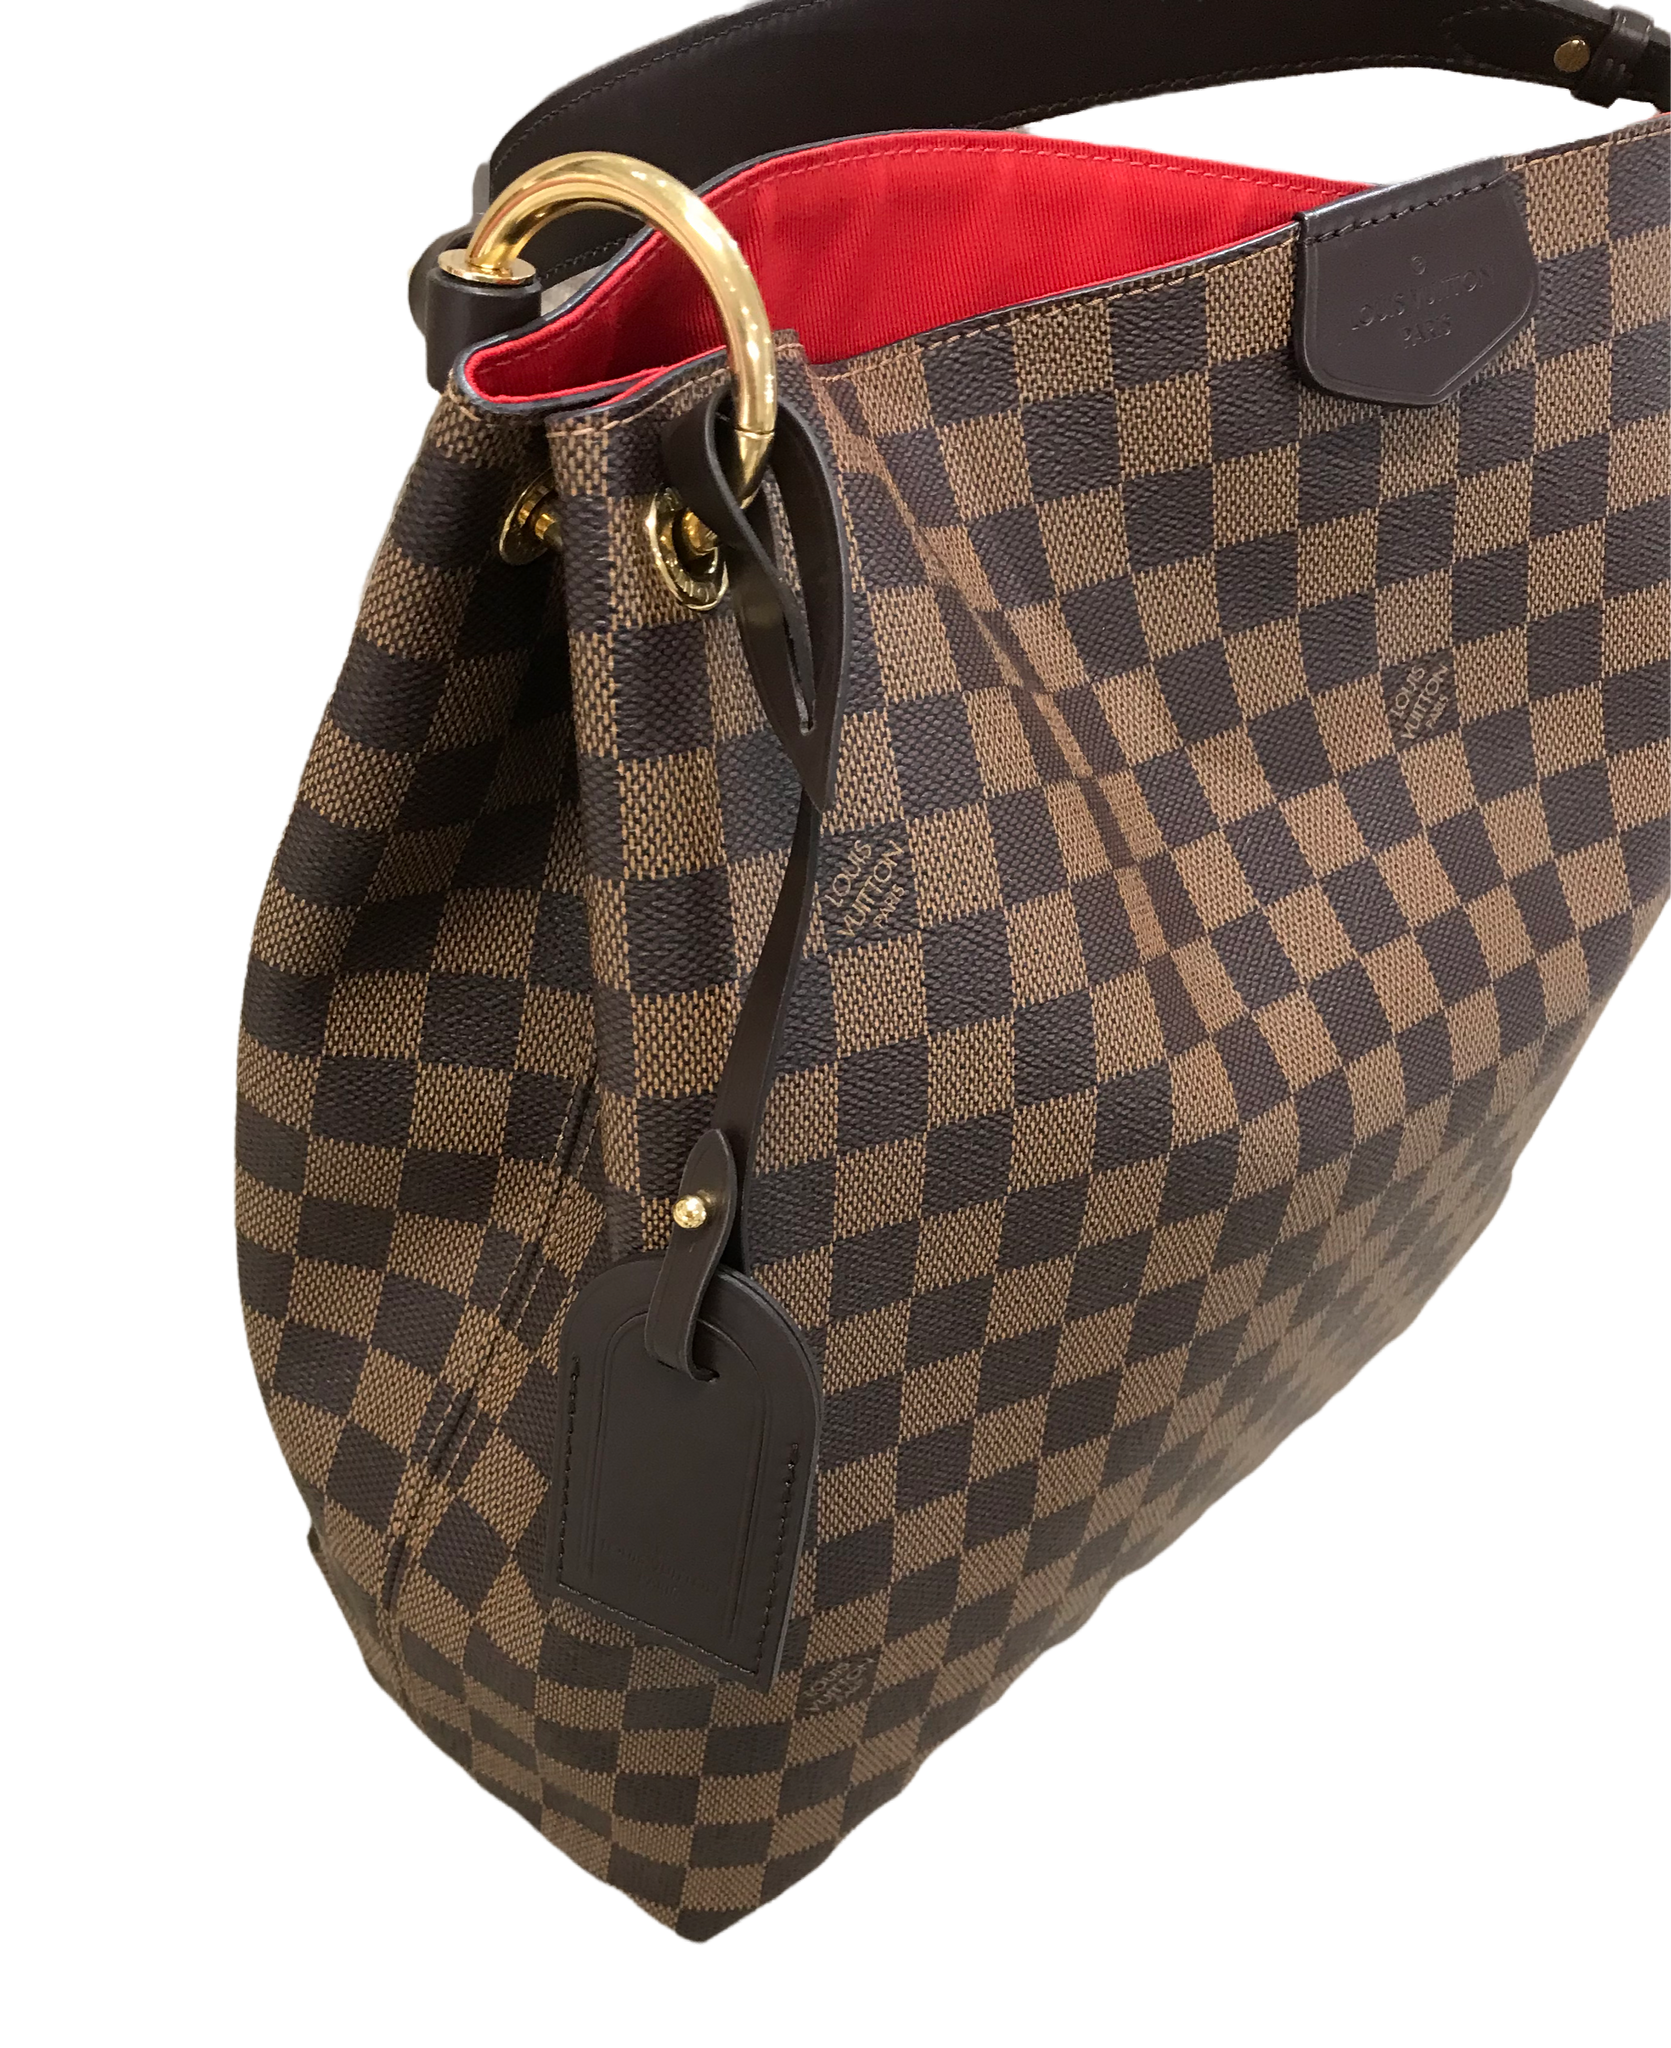 Louis Vuitton Damier Ebene Graceful MM - Brown Hobos, Handbags